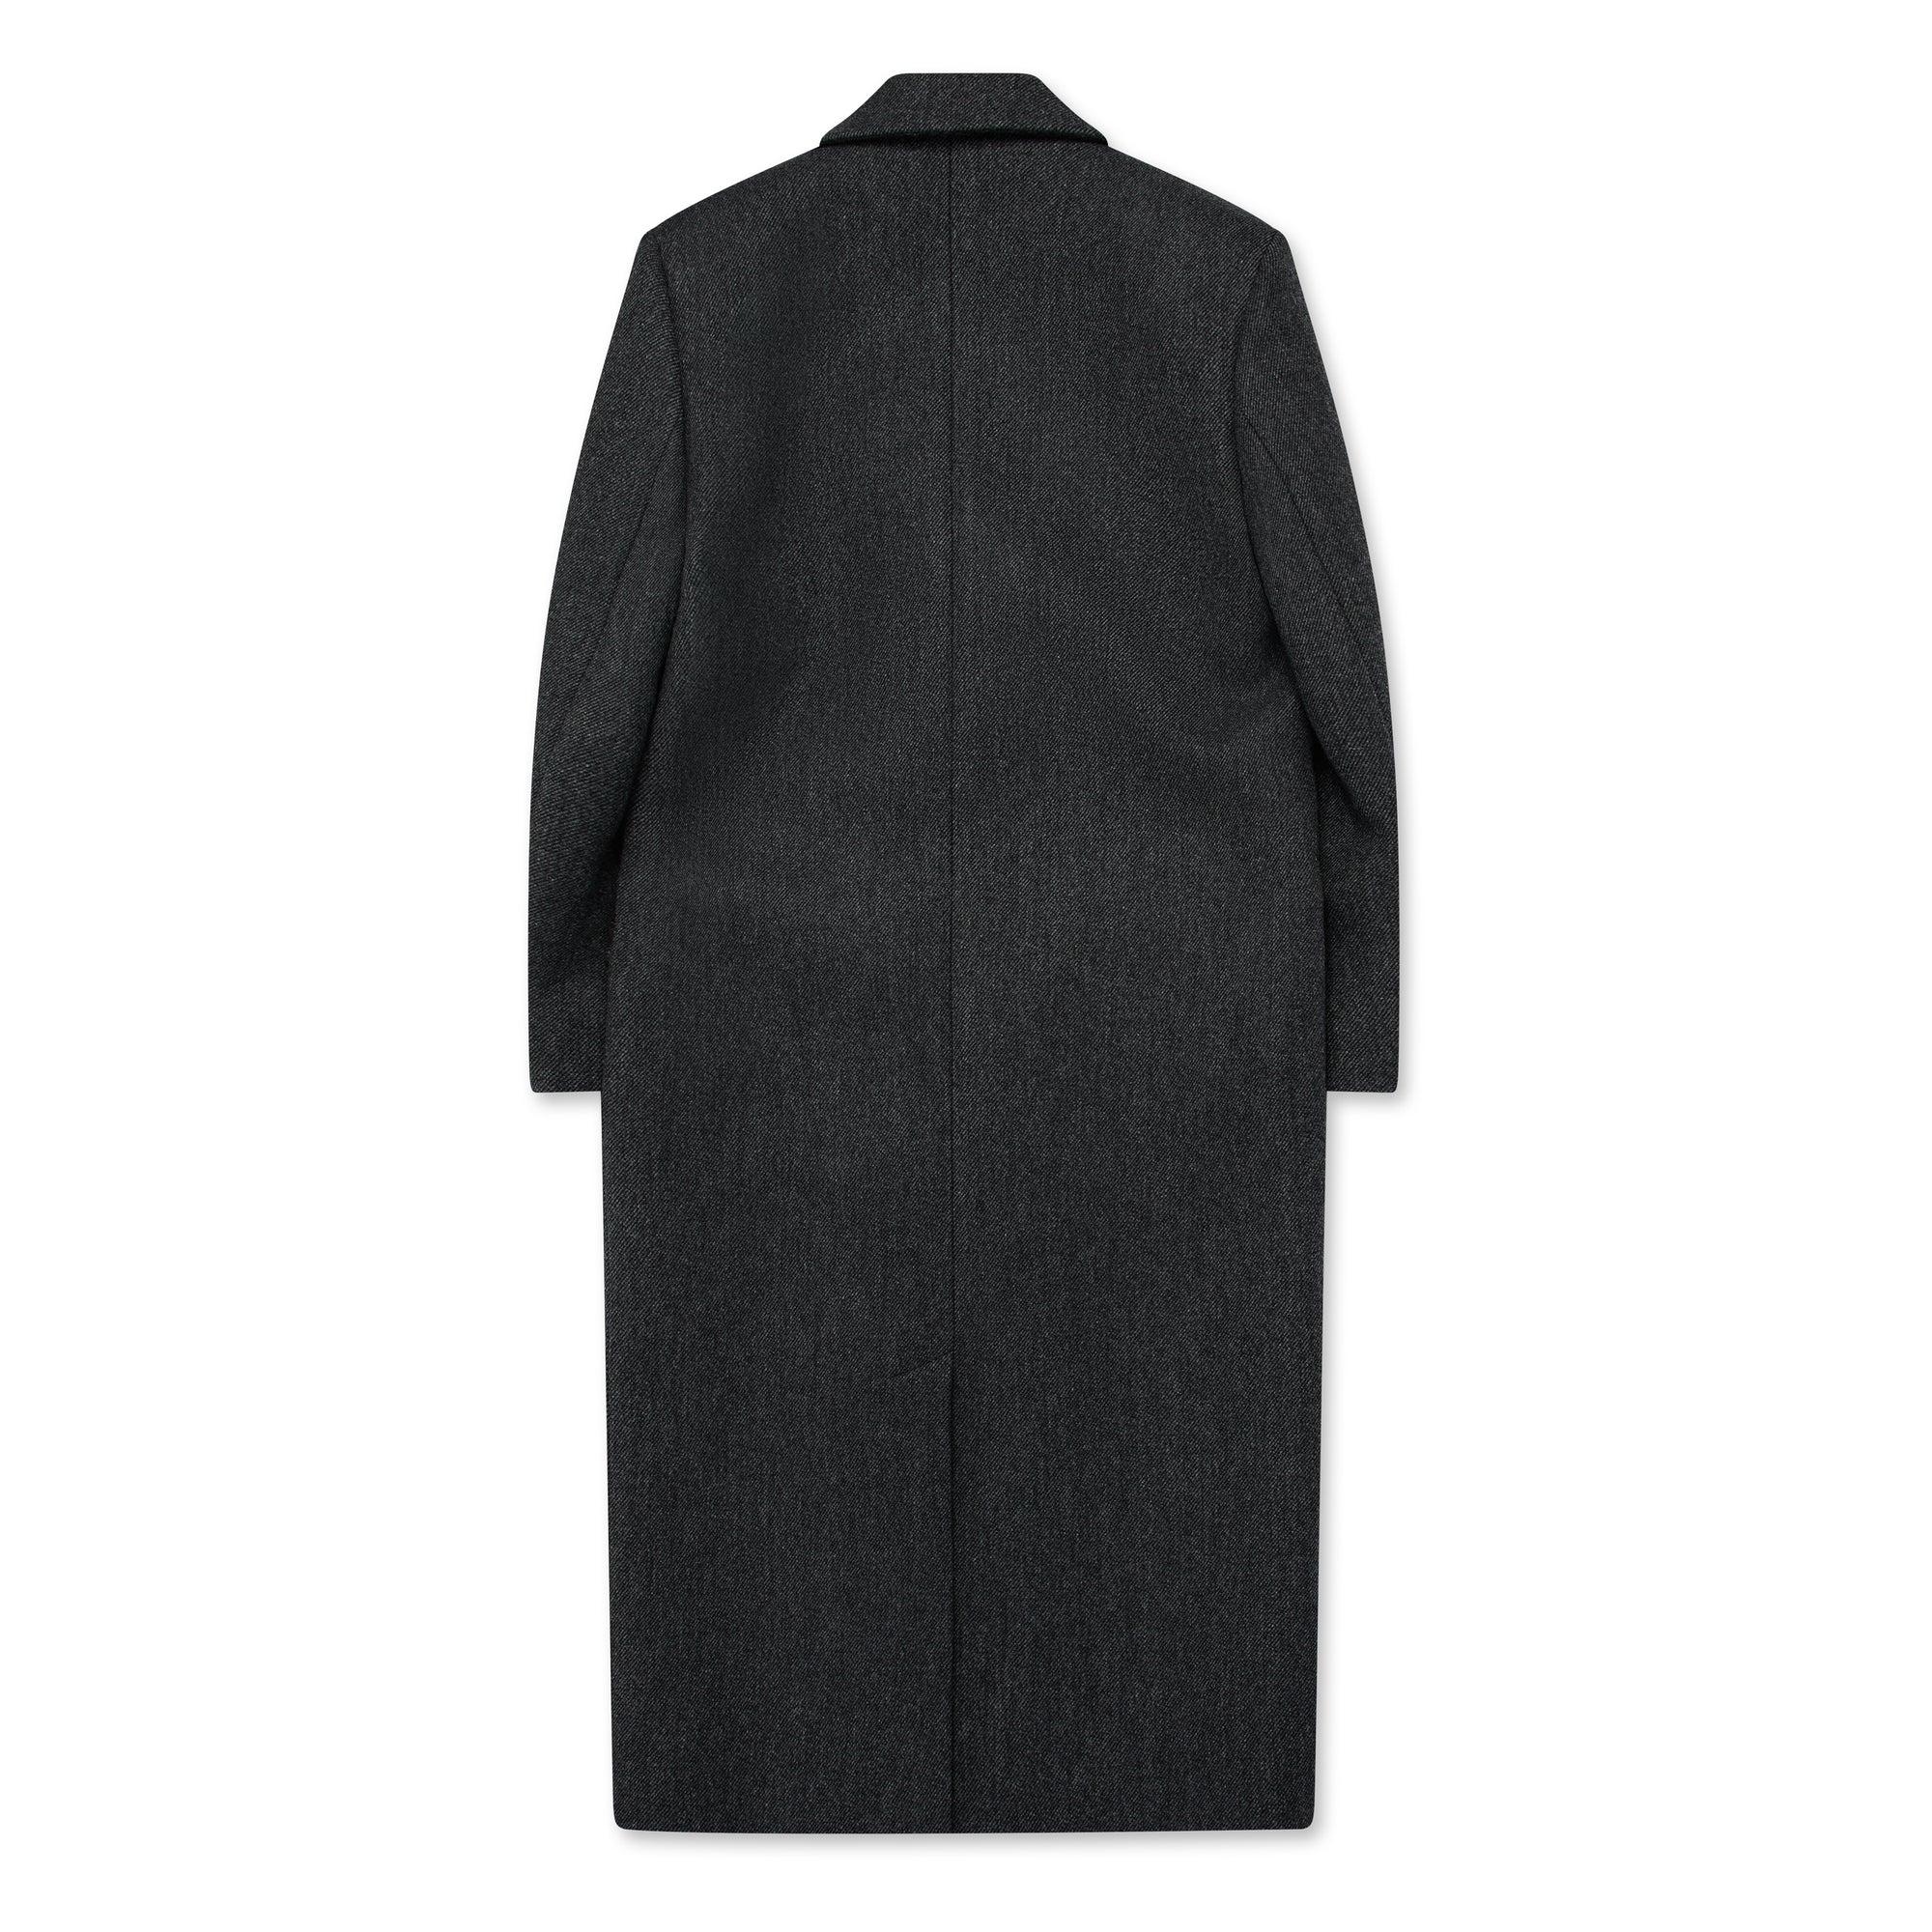 Prada - Women's Coat - (Grey) view 6